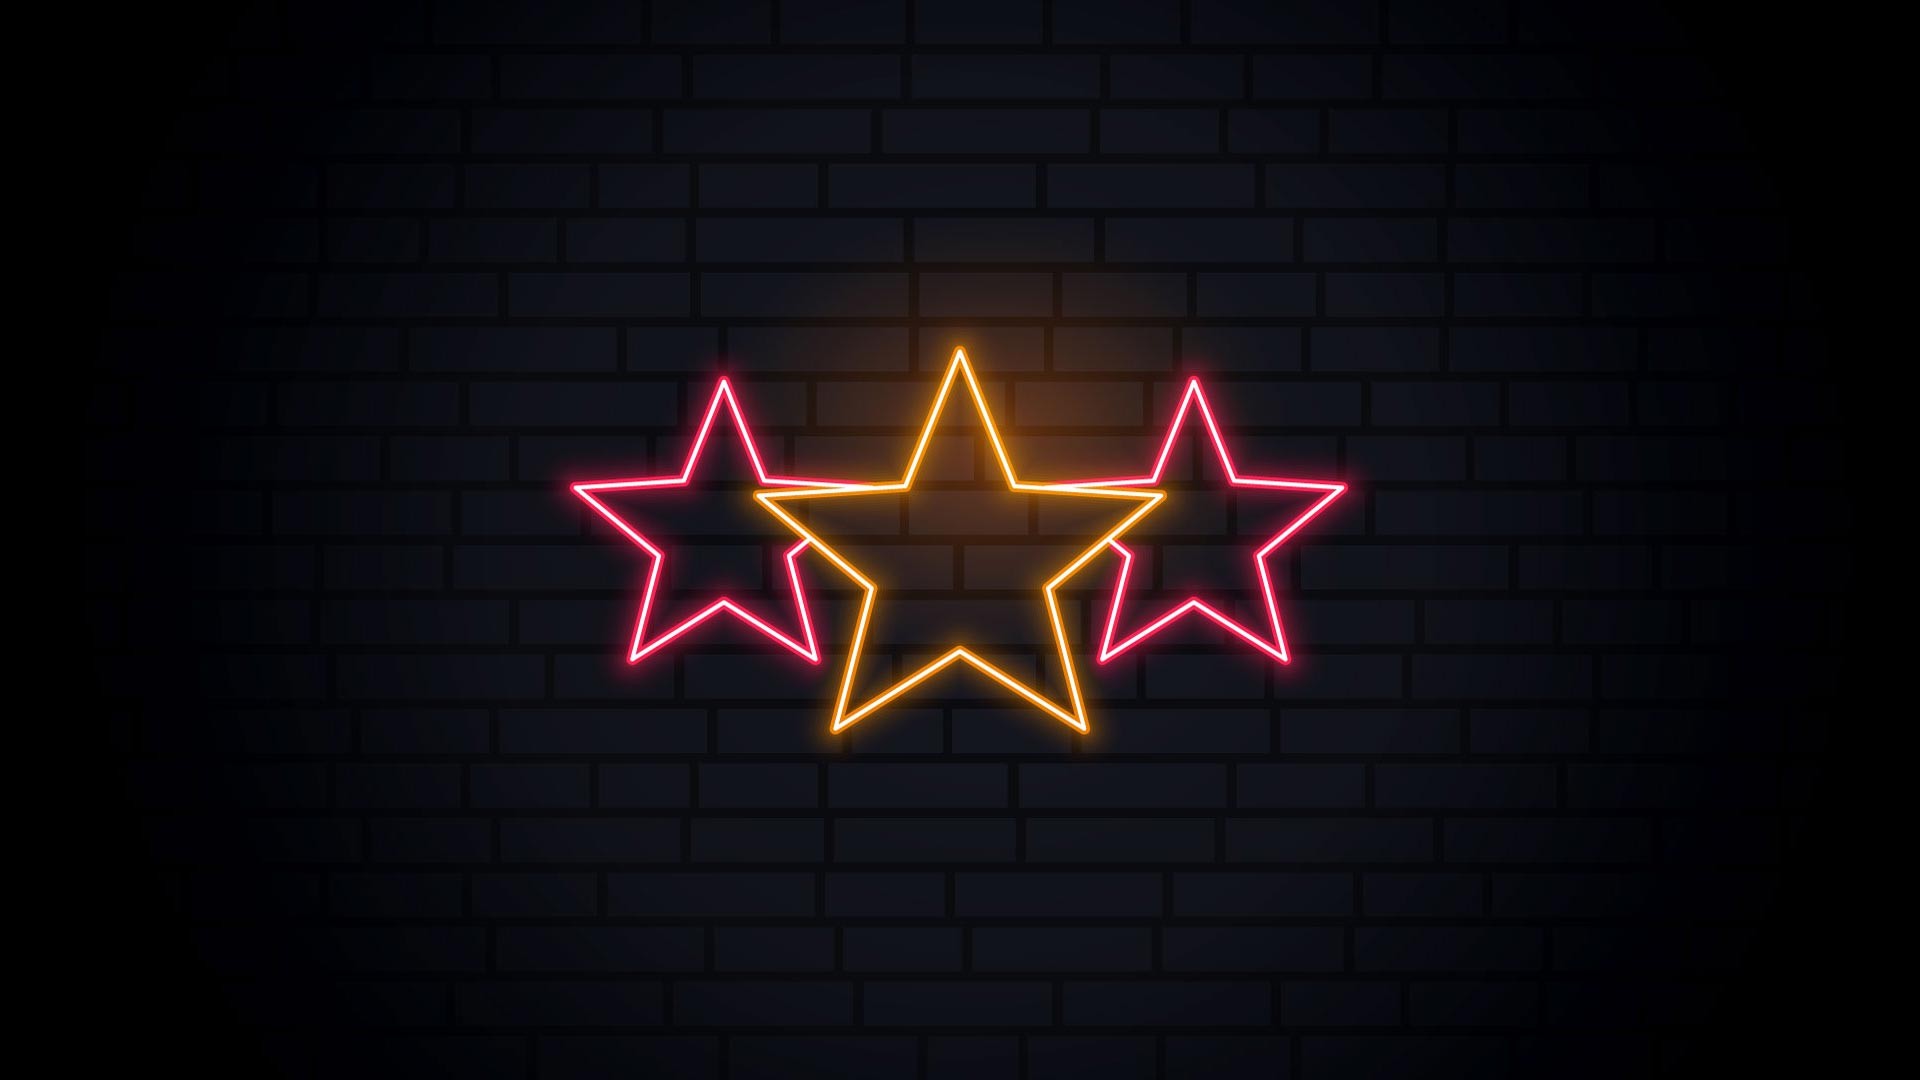 Neon lights on three stars